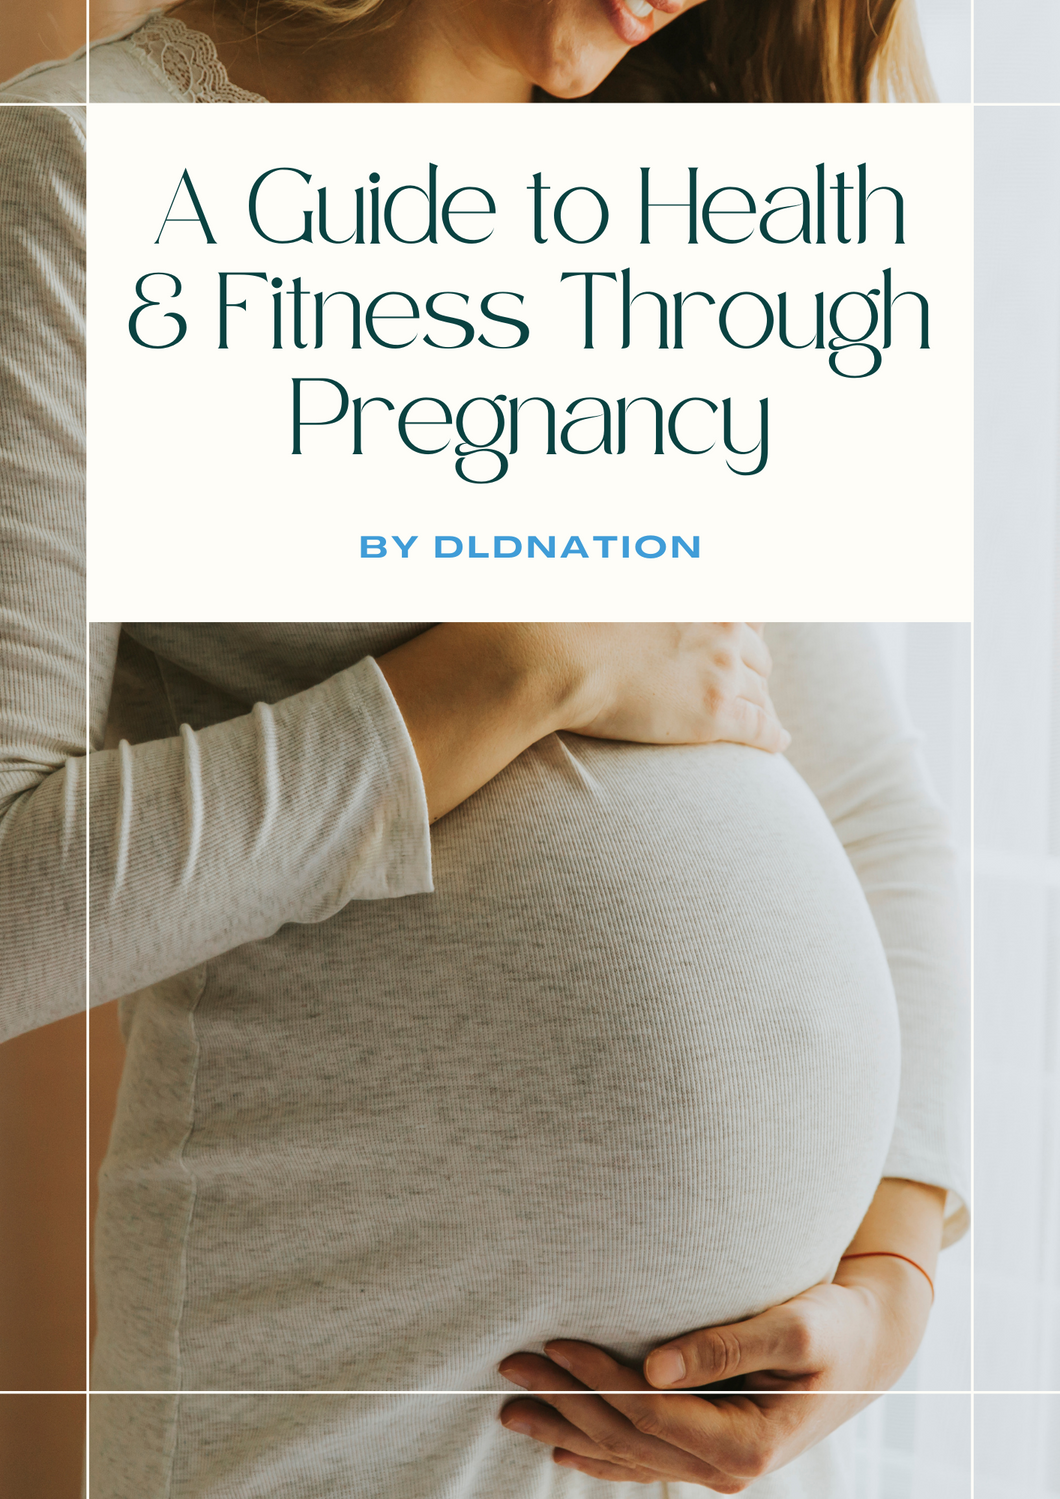 DLDNation Pregnancy Guide